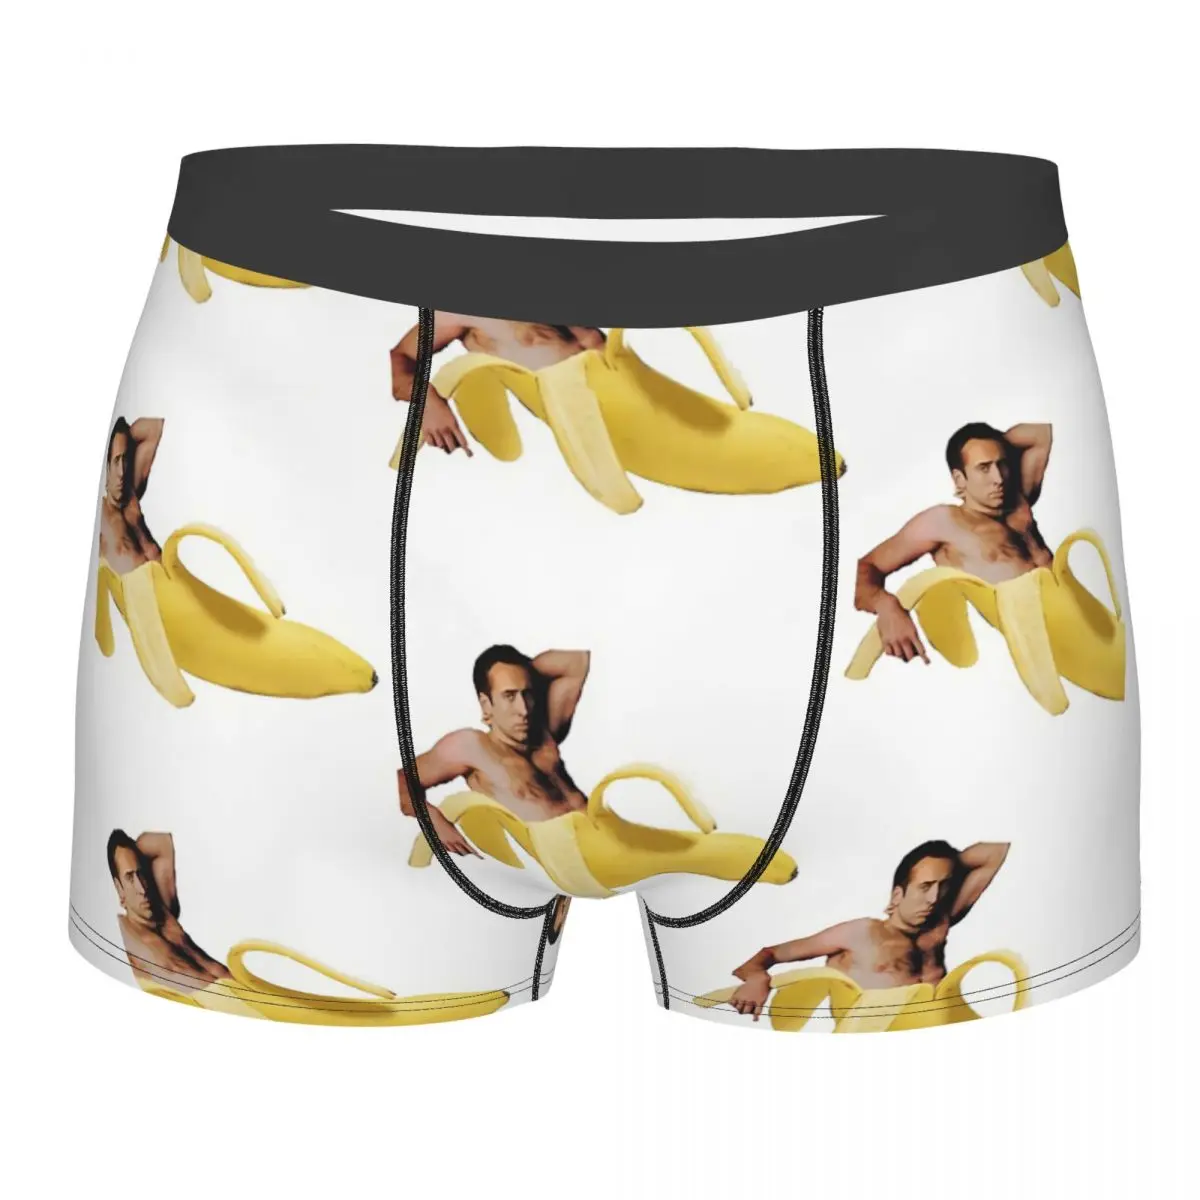 

Nicholas Cage Banana Men Boxer Briefs Meme Breathable Funny Underwear Top Quality Print Shorts Gift Idea